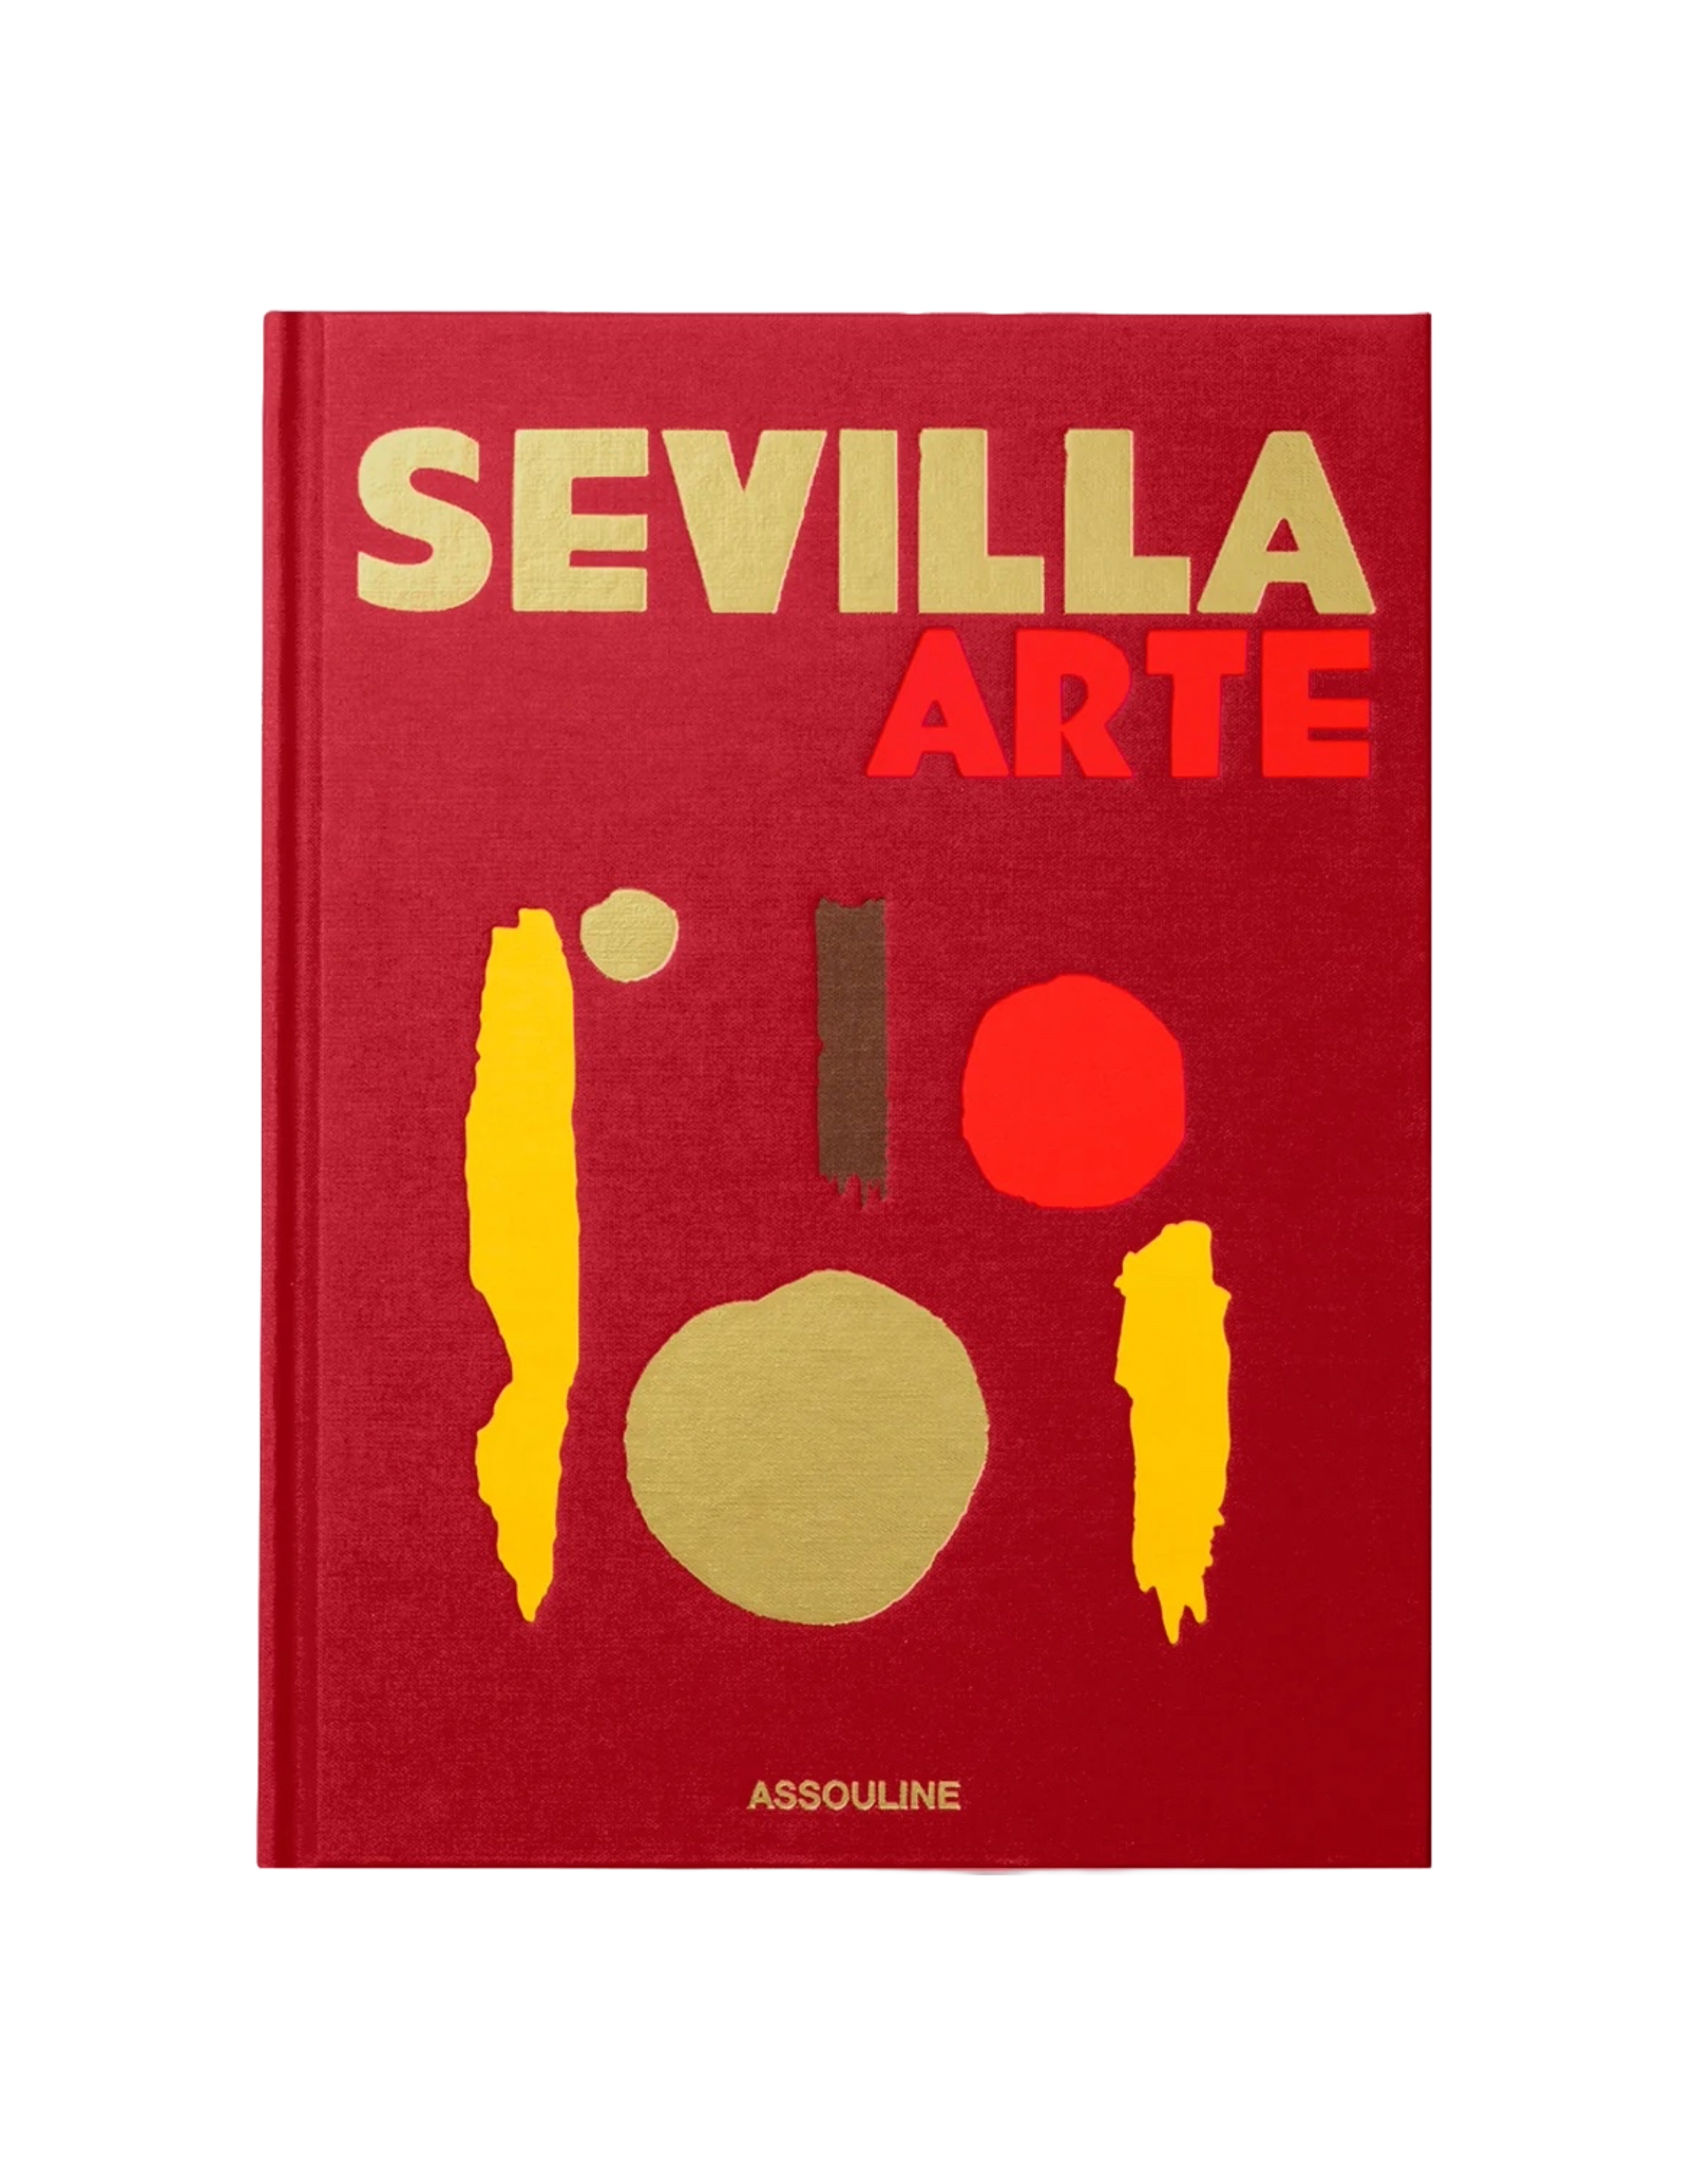 Sevilla Arte